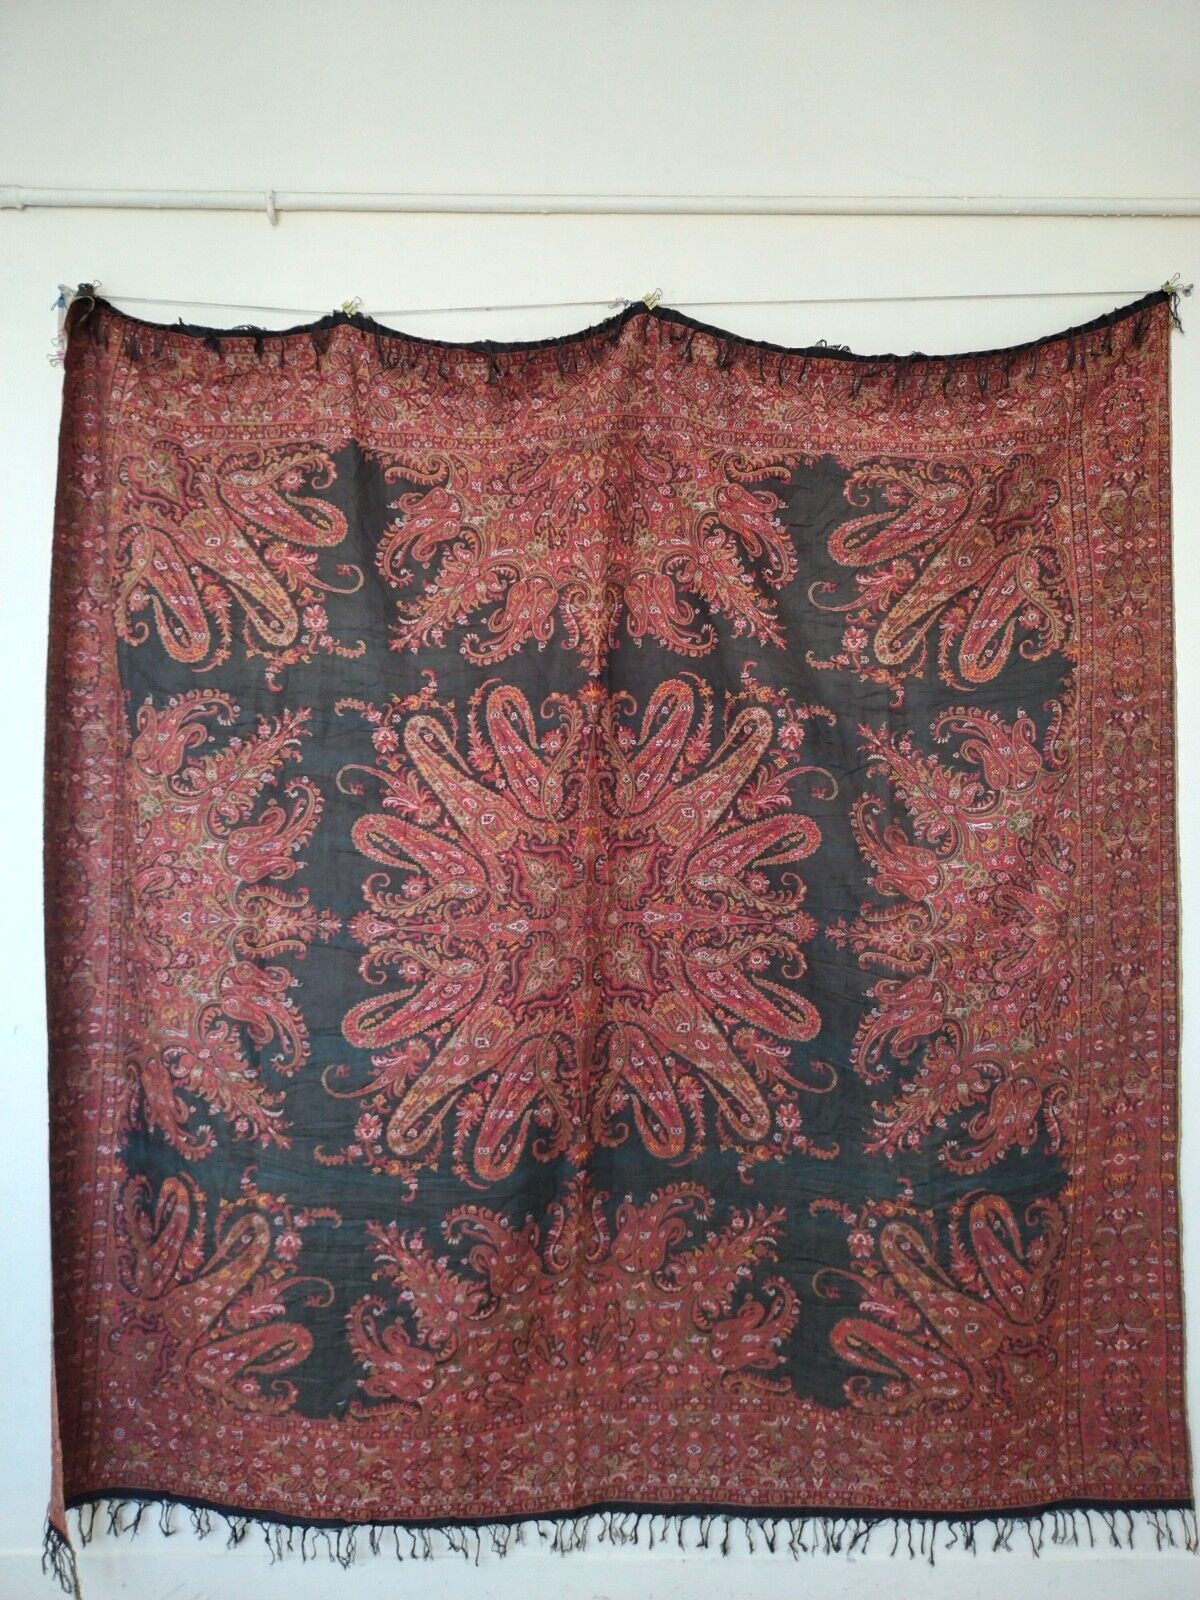 Antique amazing french paisley shawl or tablecloth piano scarf fringe item504